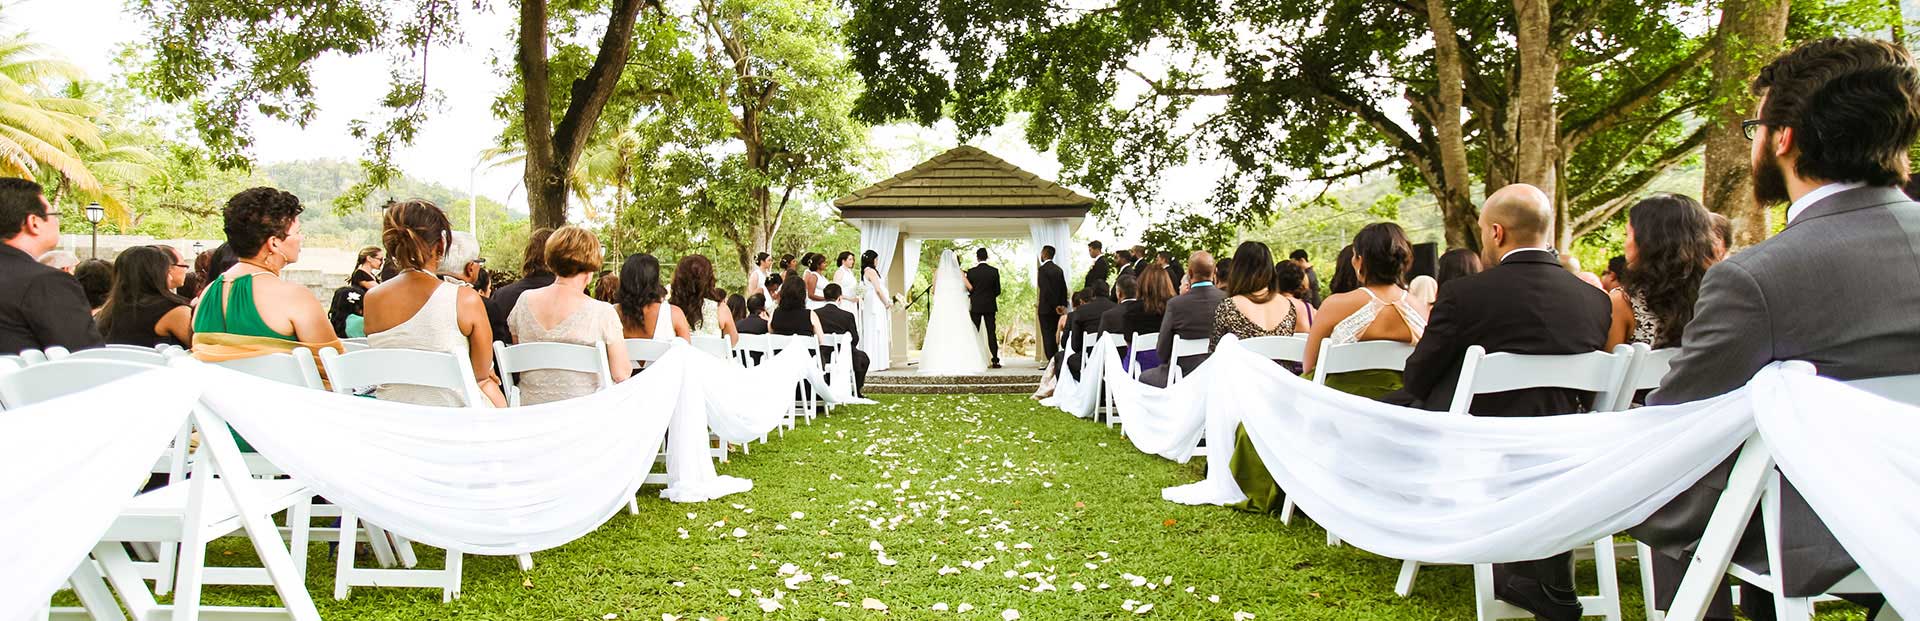 Amazing wedding ceremony in the gardens at Drew Manor, best wedding venue in Trinidad